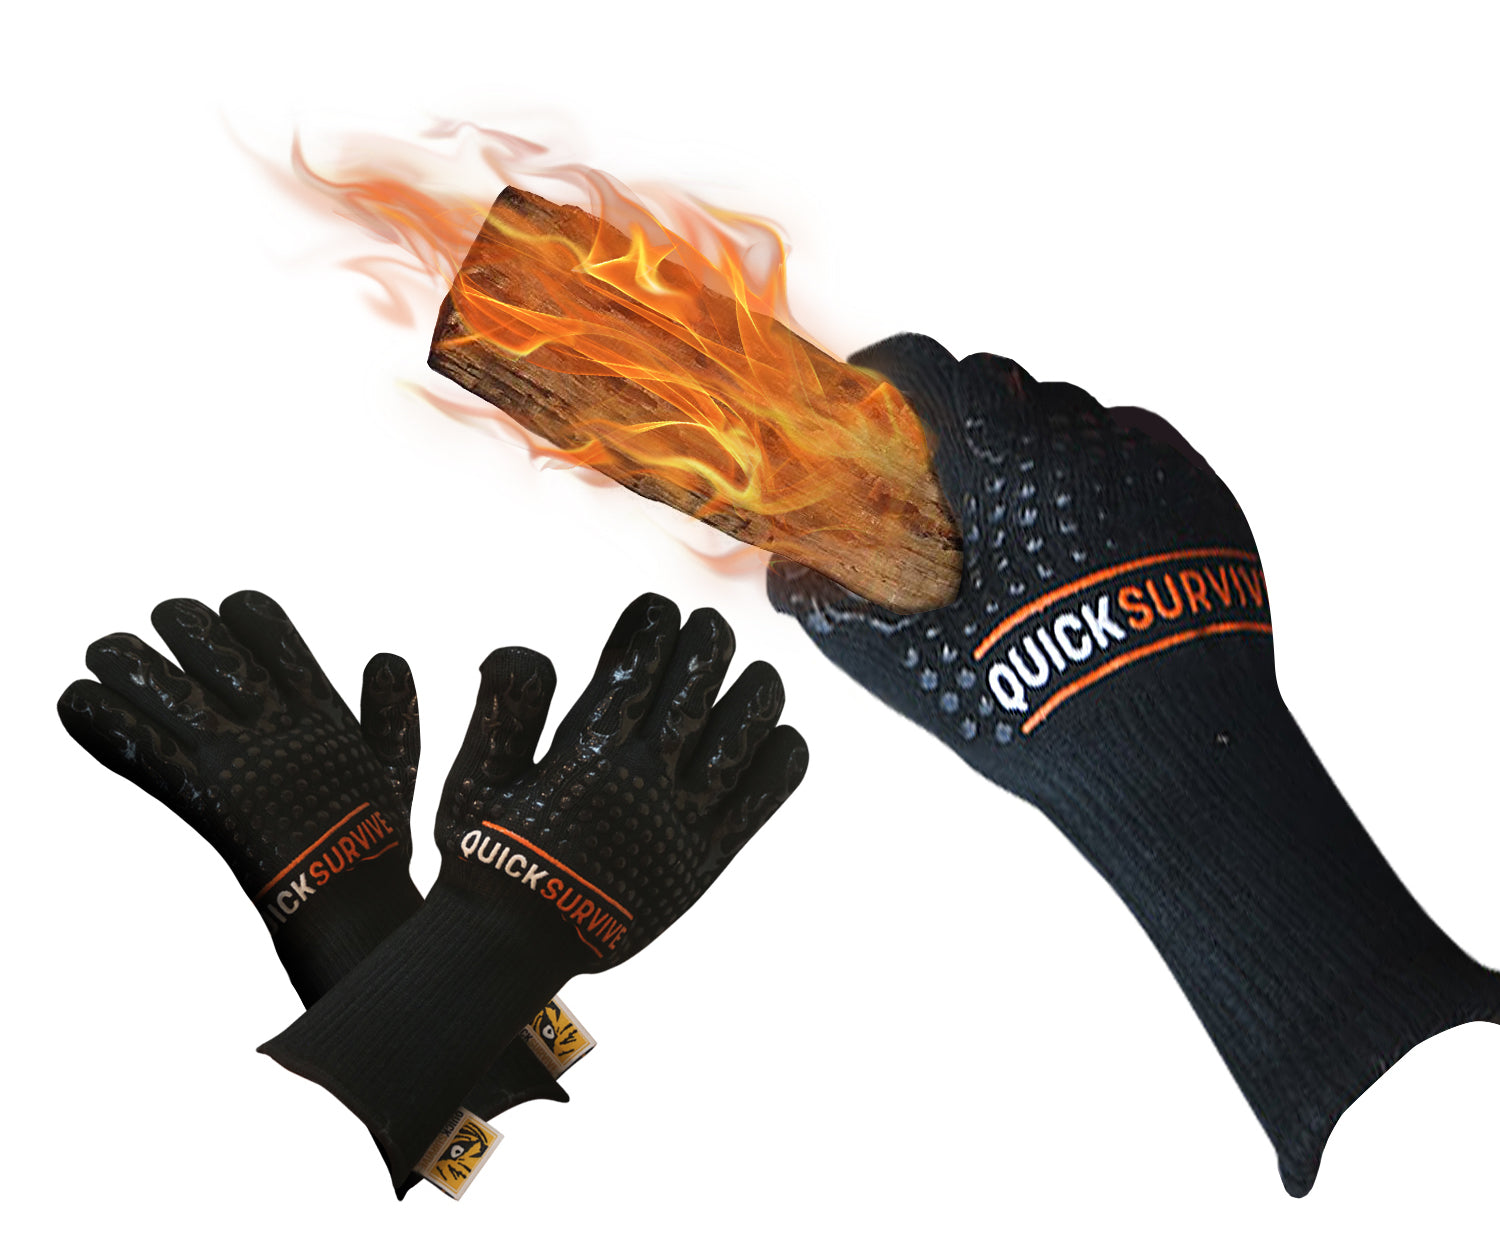 Quick Survive Heat Resistant Fire Safety Glove